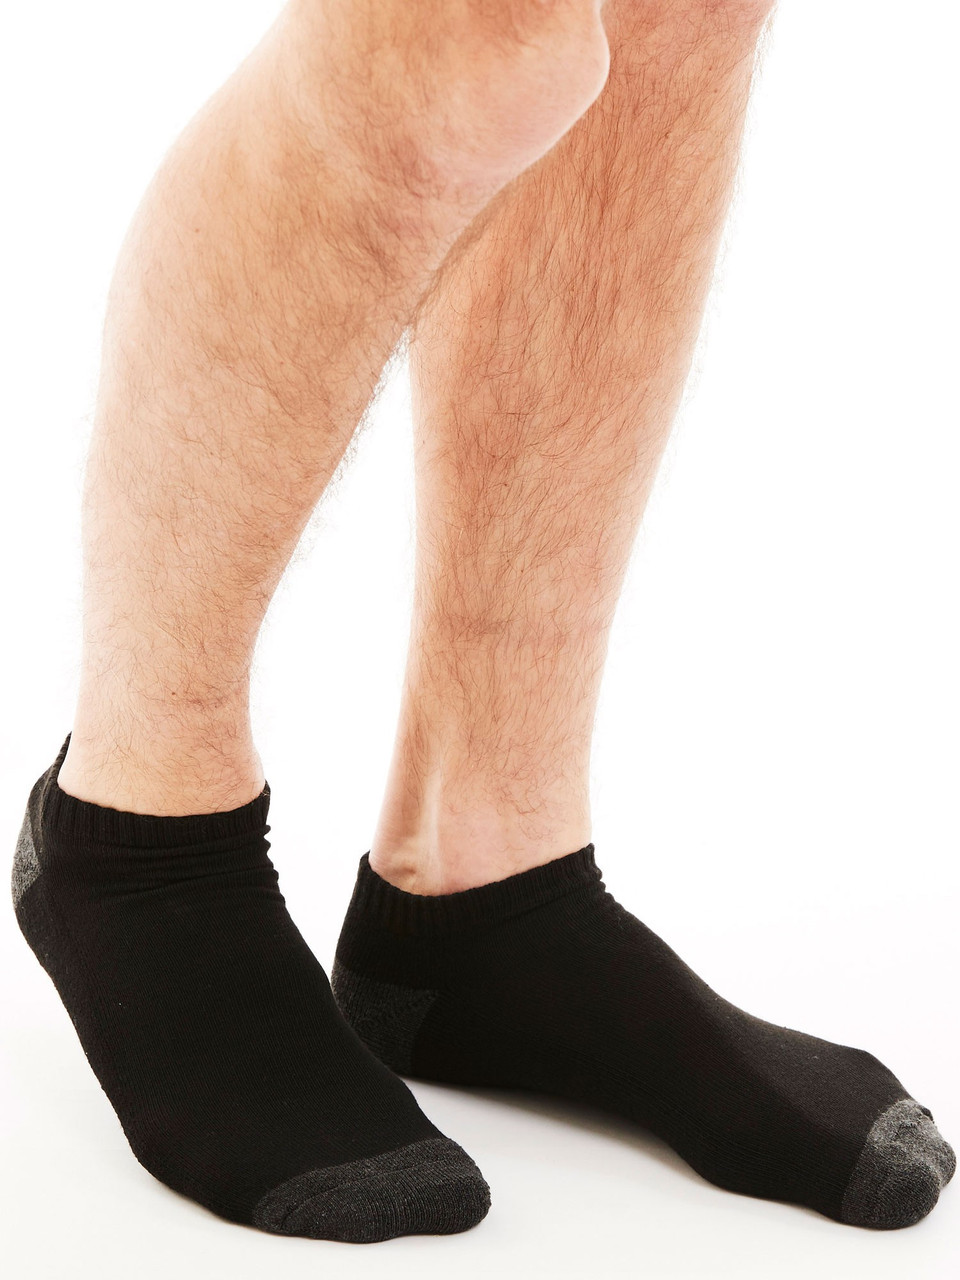 Xersion Lightweight Performance 3 Pair Low Cut Socks Mens